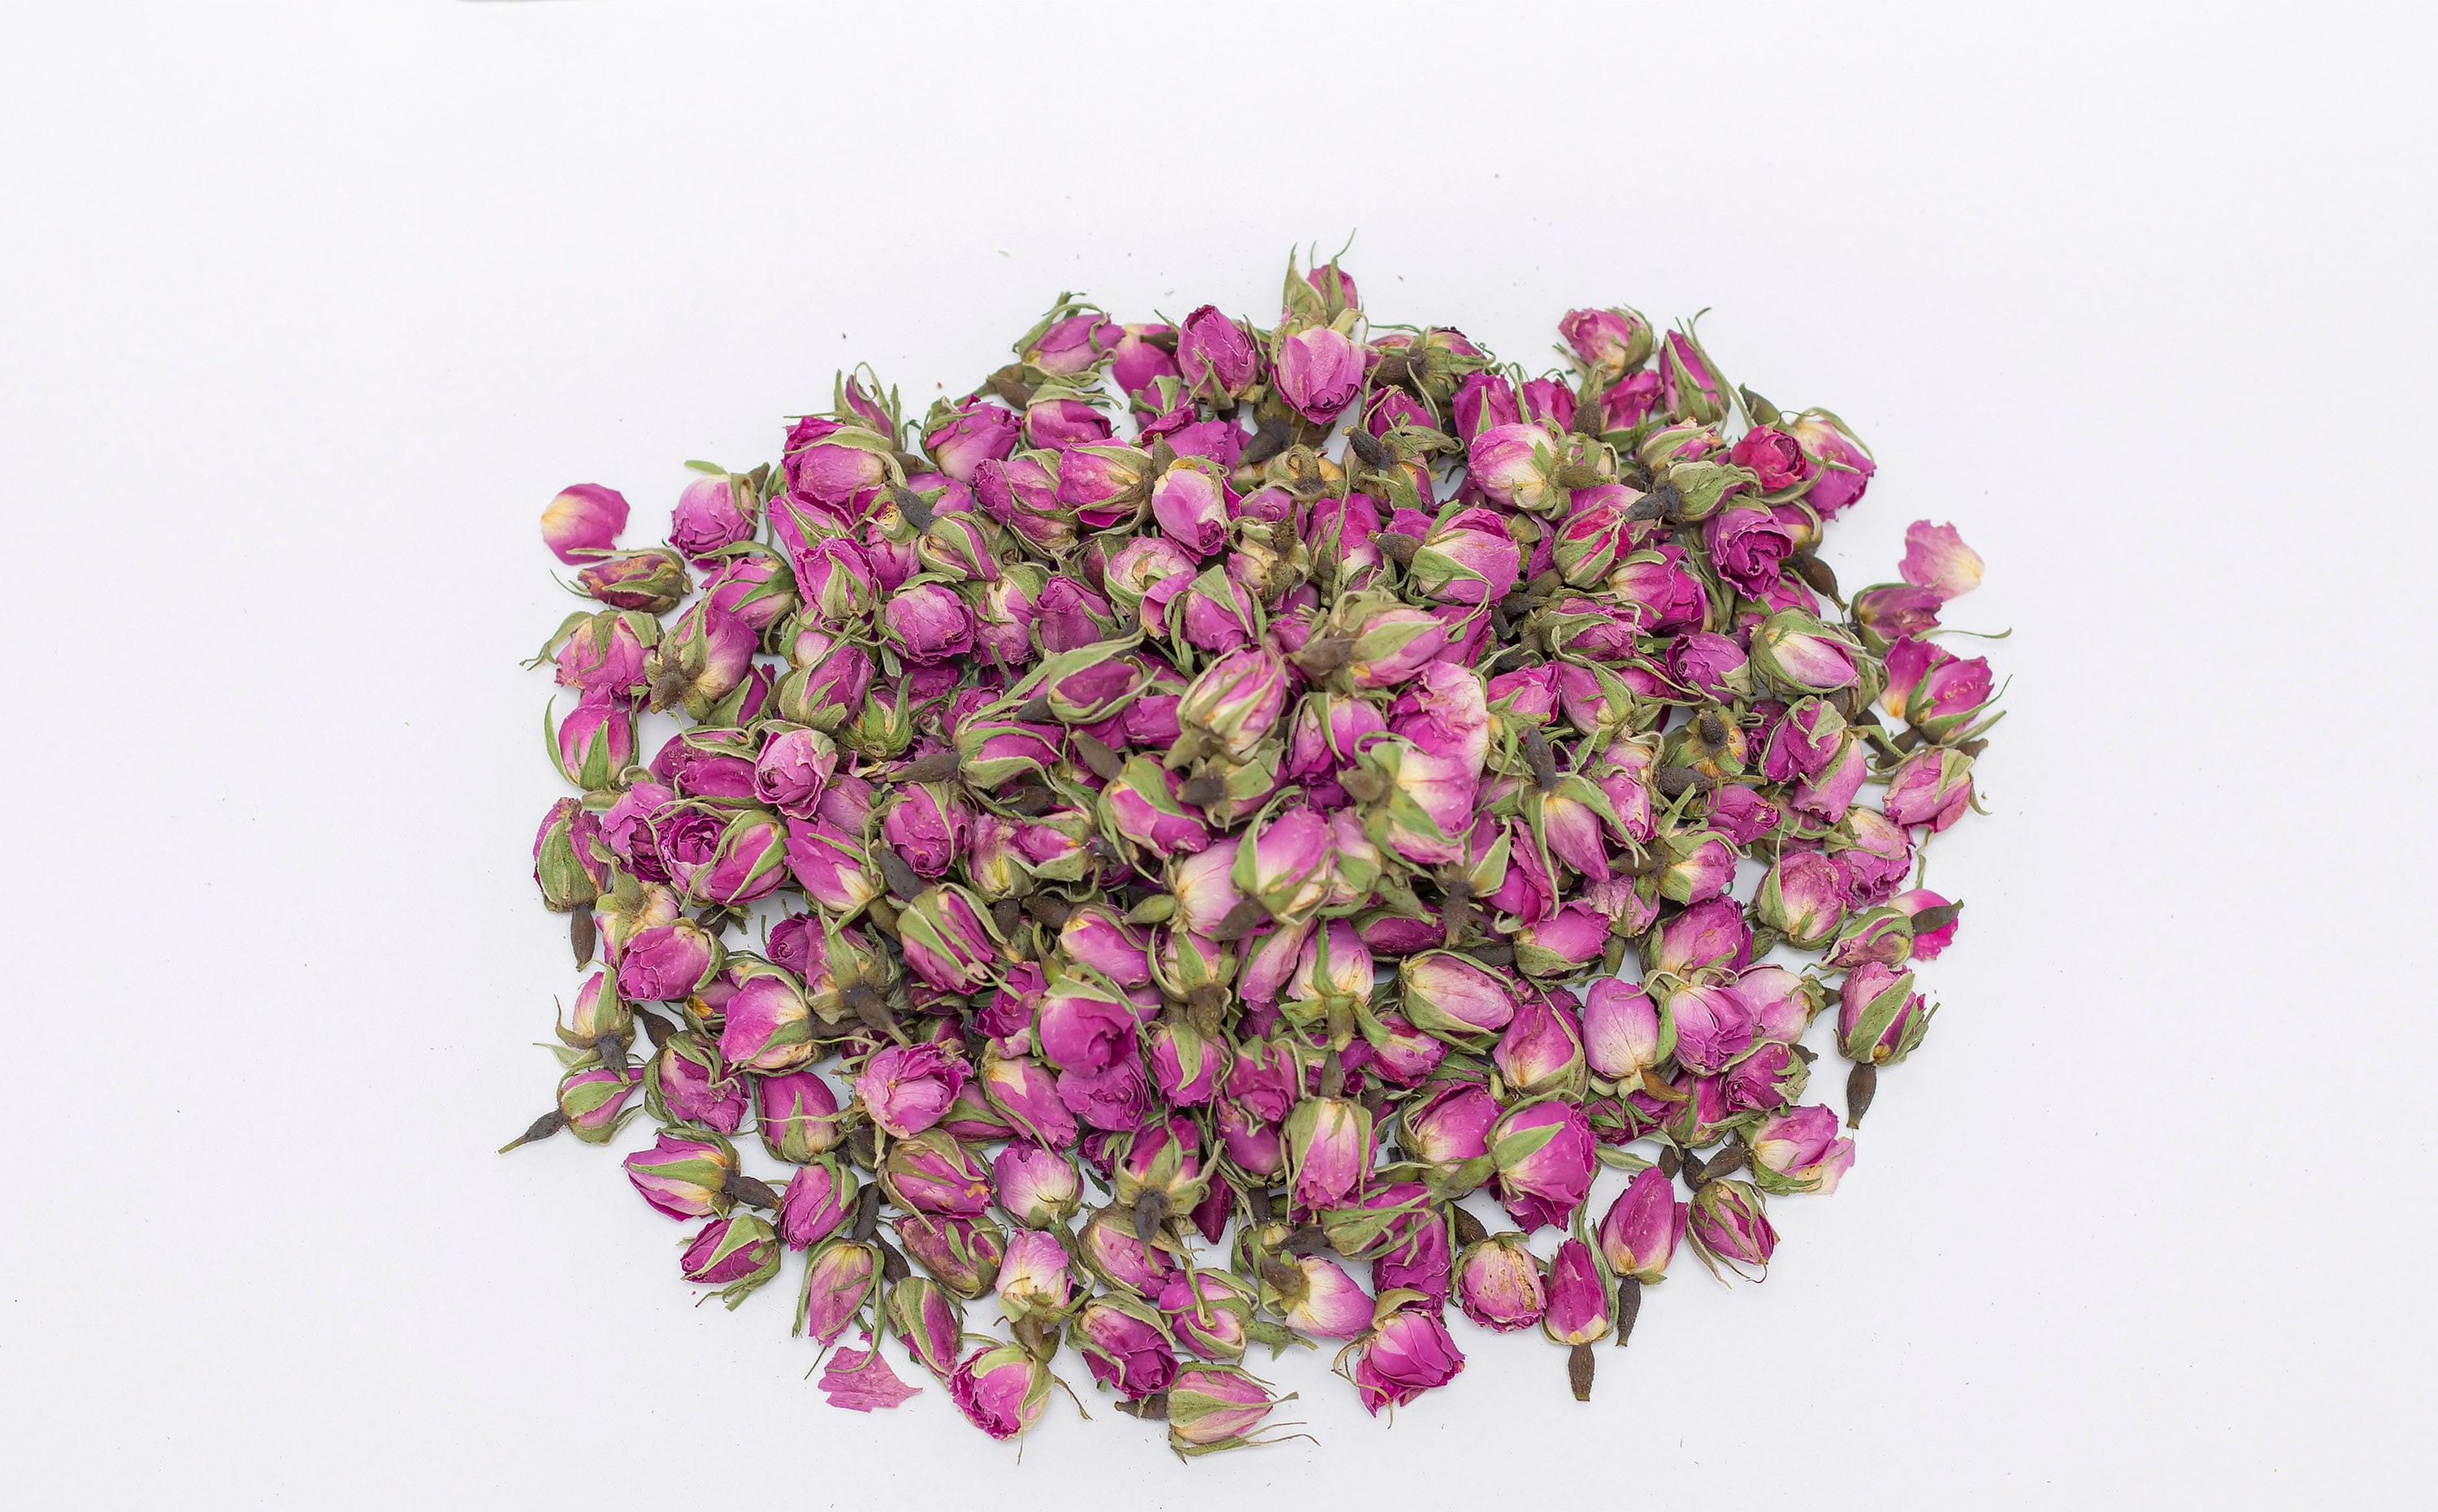 buy dried damask rose buds + great price - Arad Branding